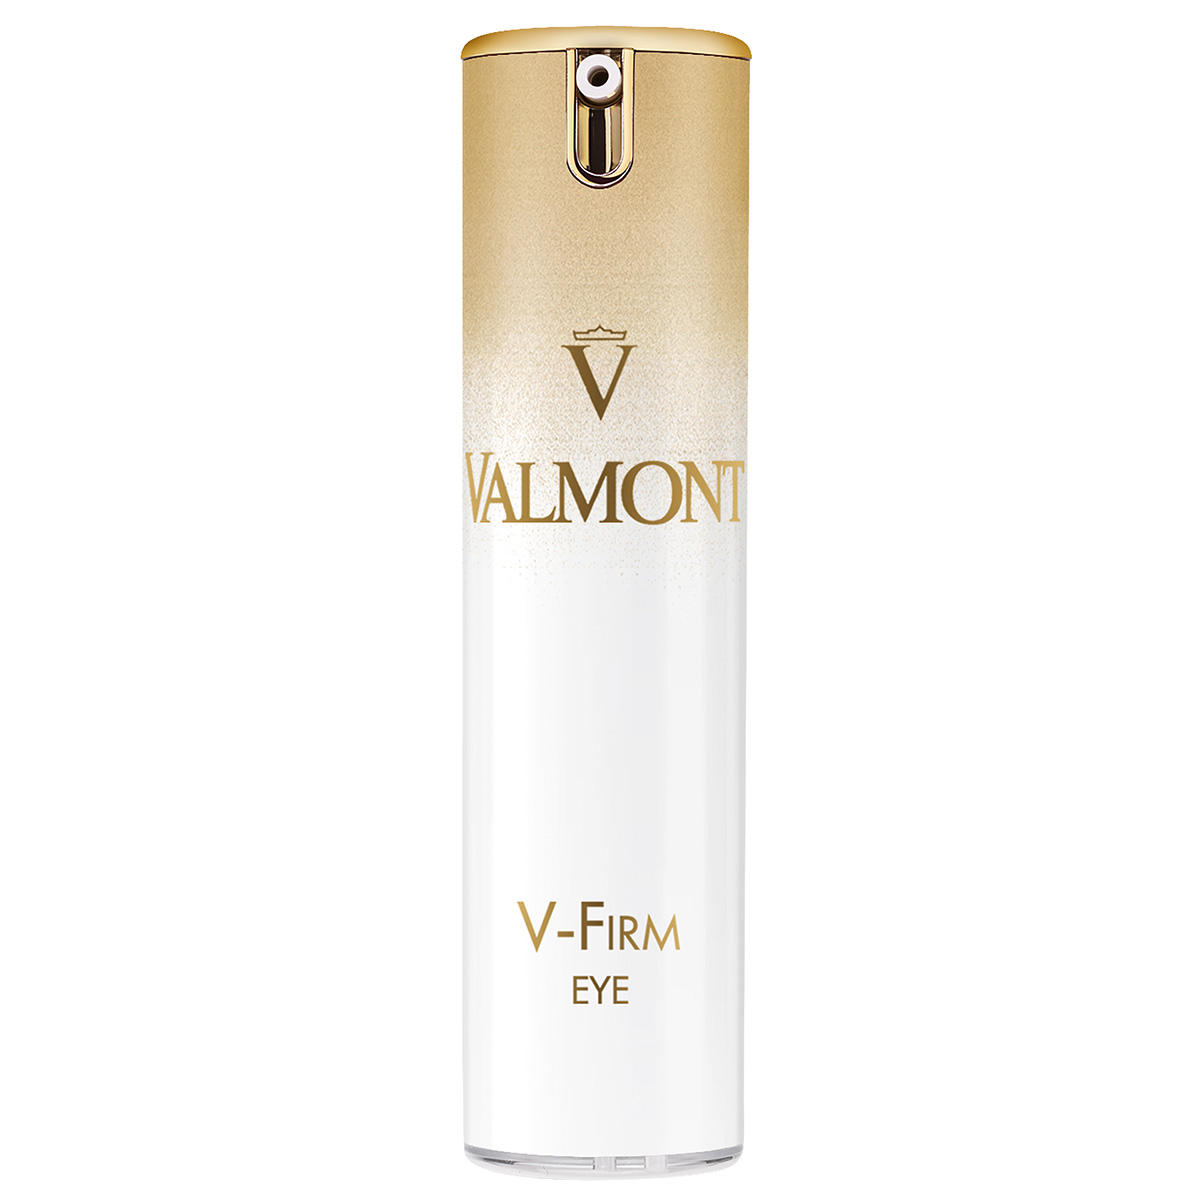 Valmont V-FIRM EYE 15 ml - 1